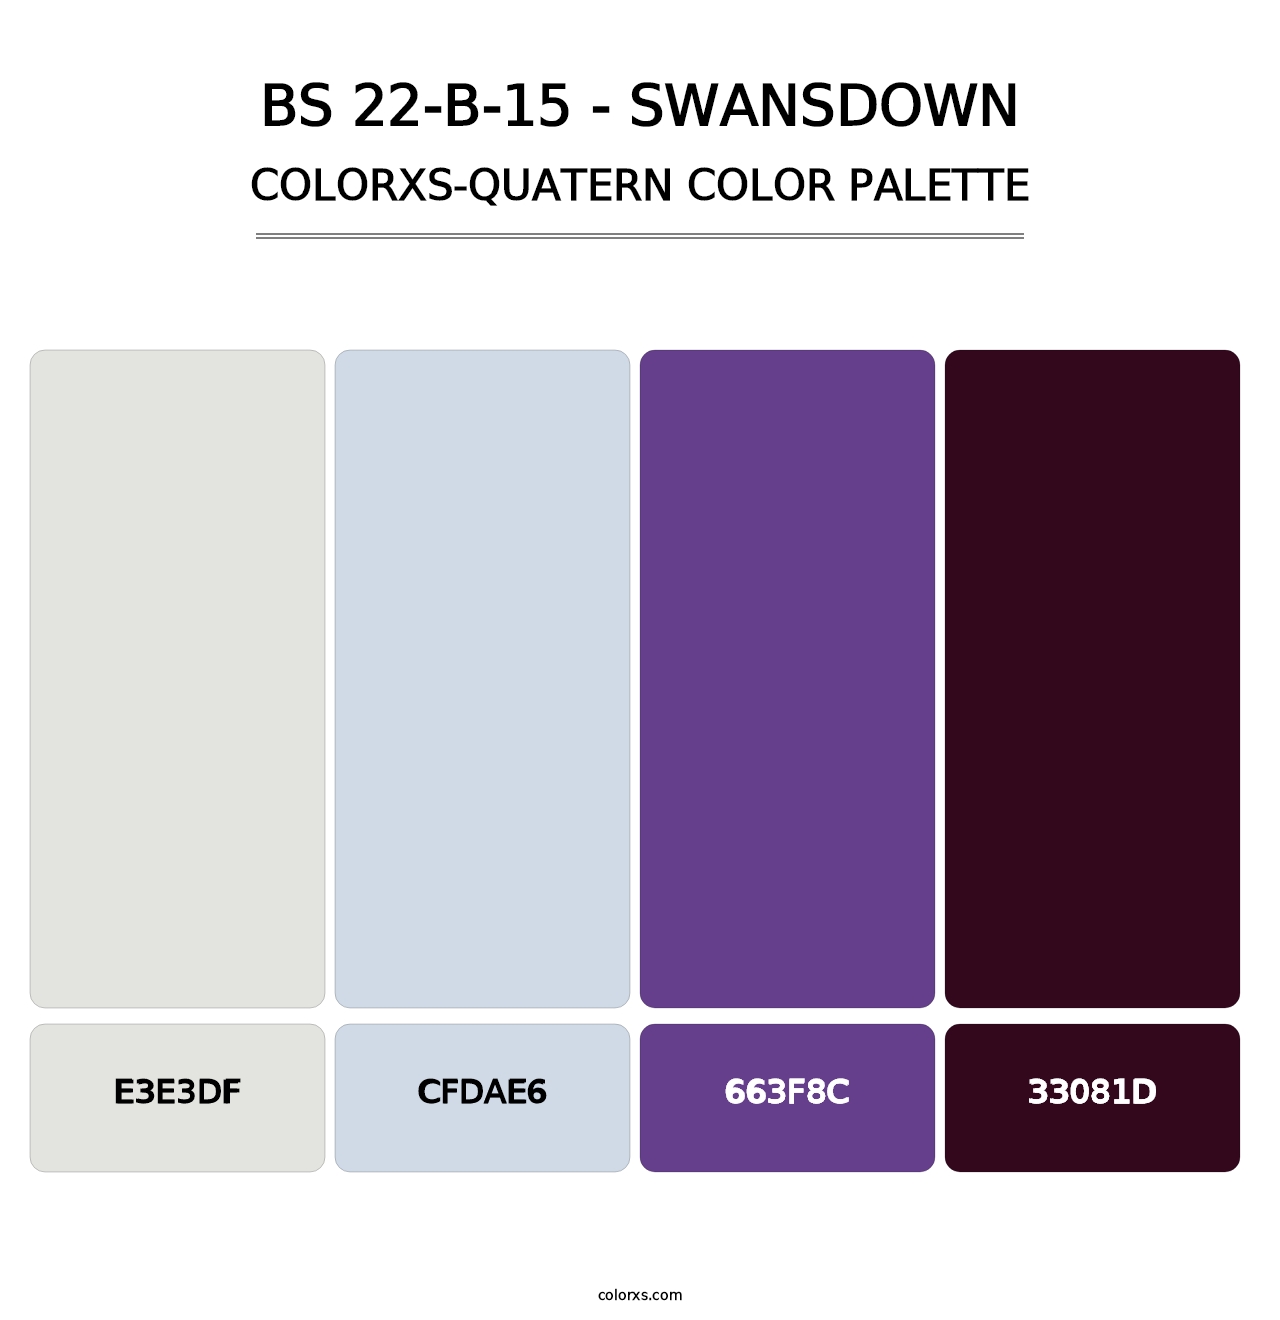 BS 22-B-15 - Swansdown - Colorxs Quatern Palette